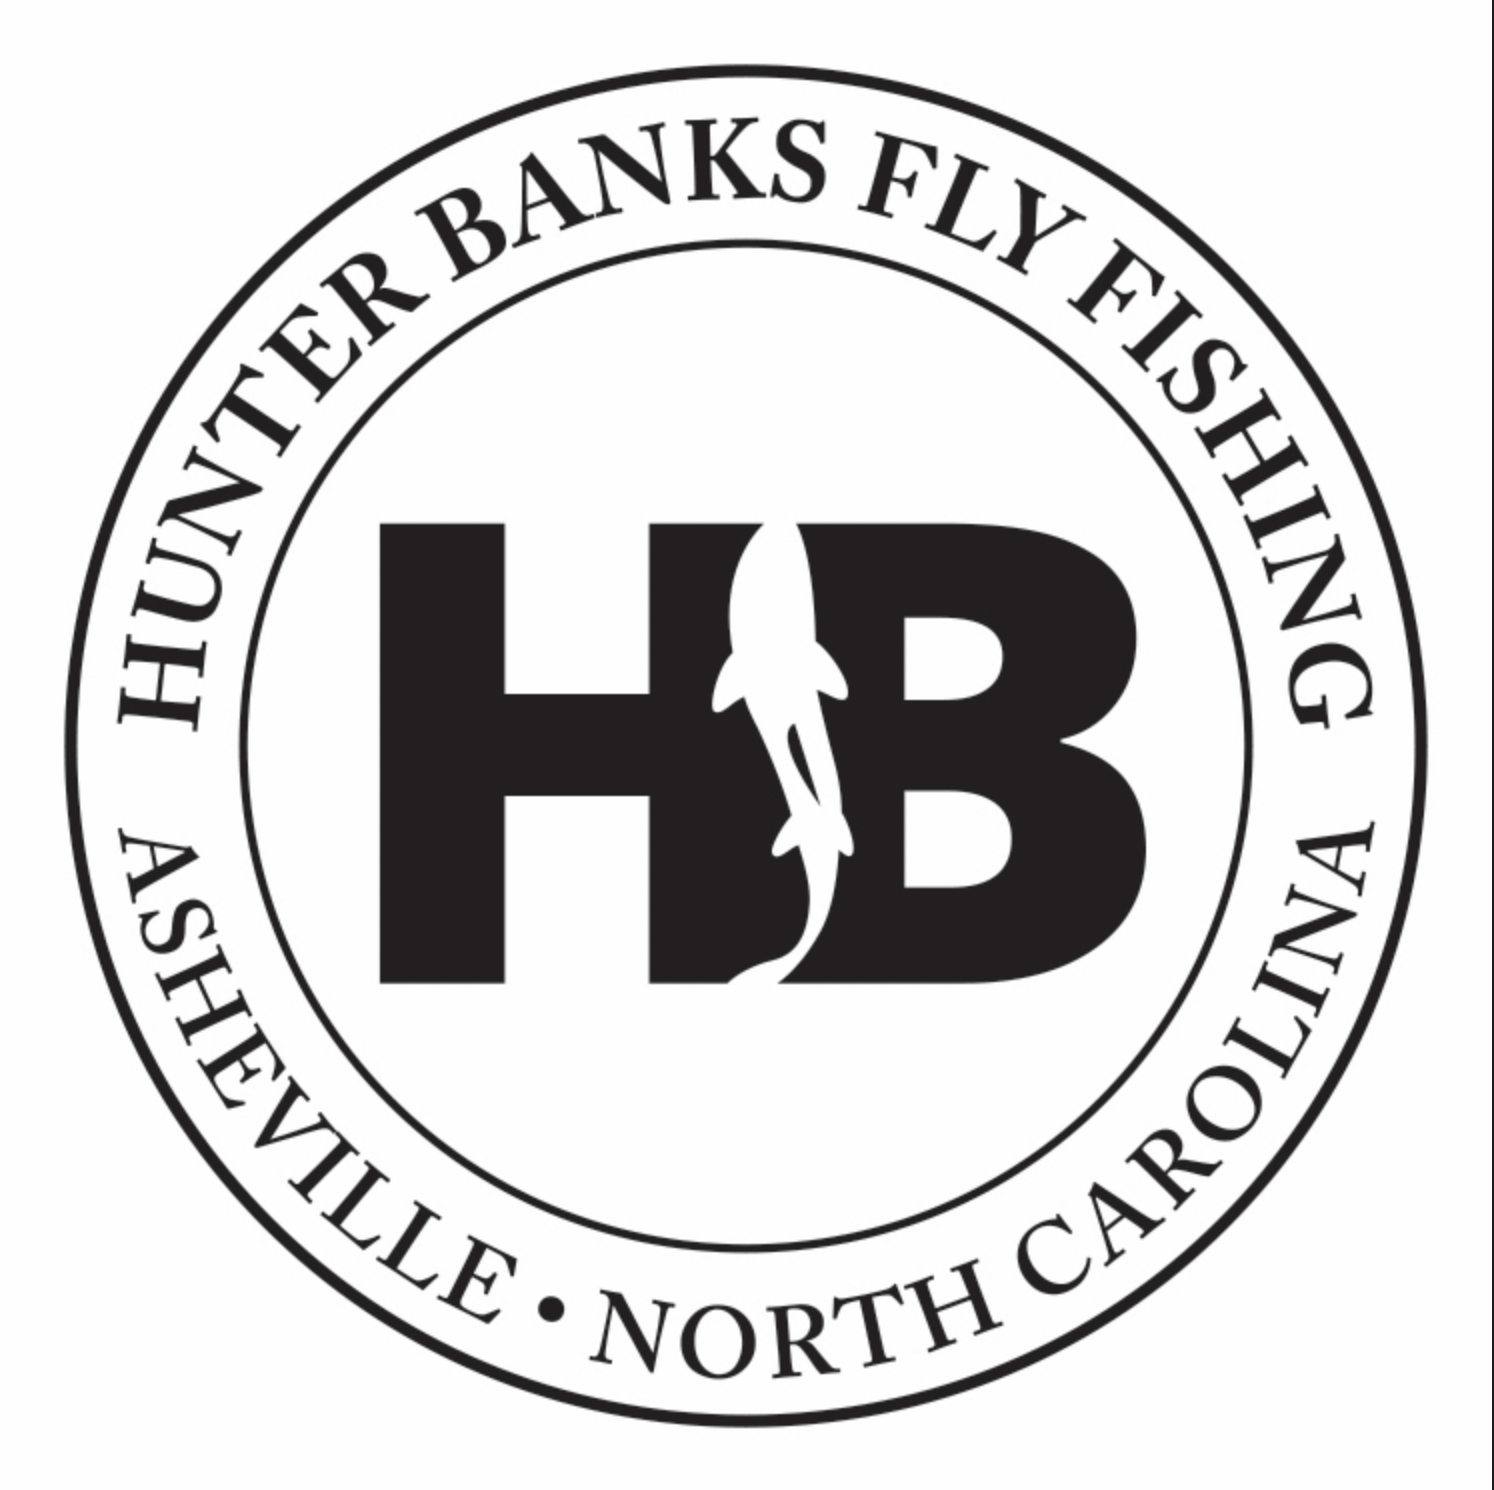 Hunter Banks Fly FIshing